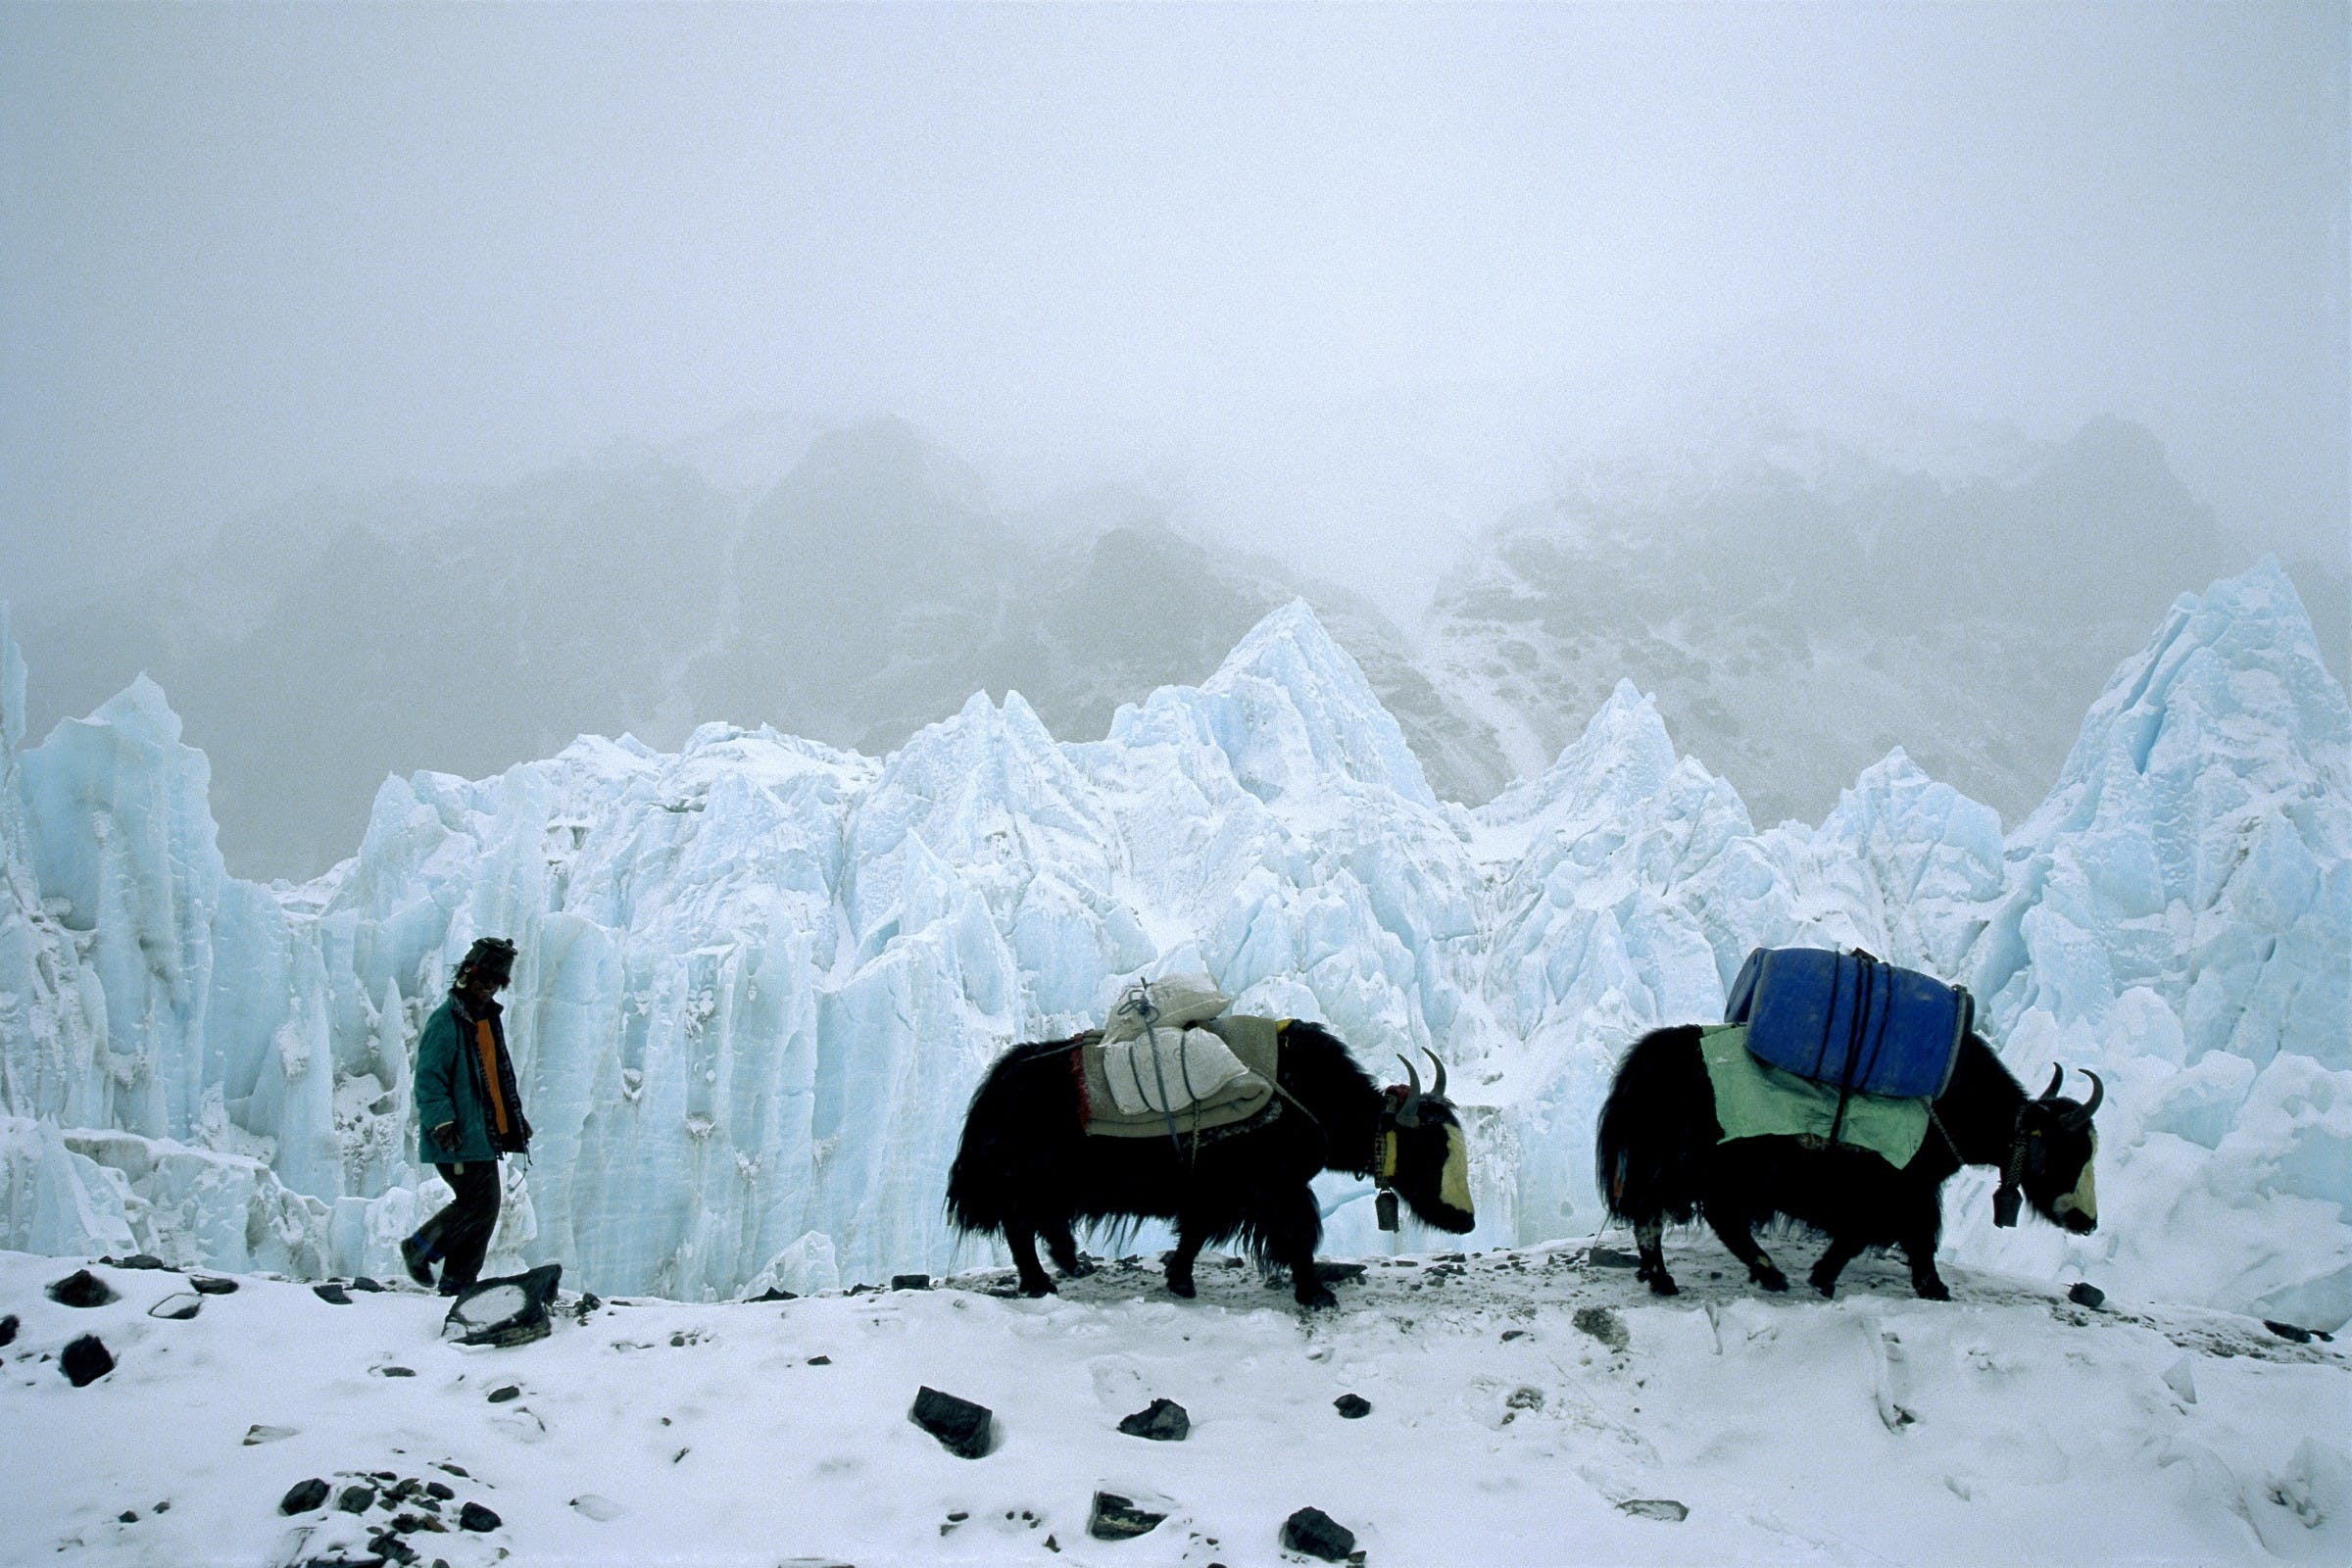 Yak man with his yaks, Everest area, Tibet